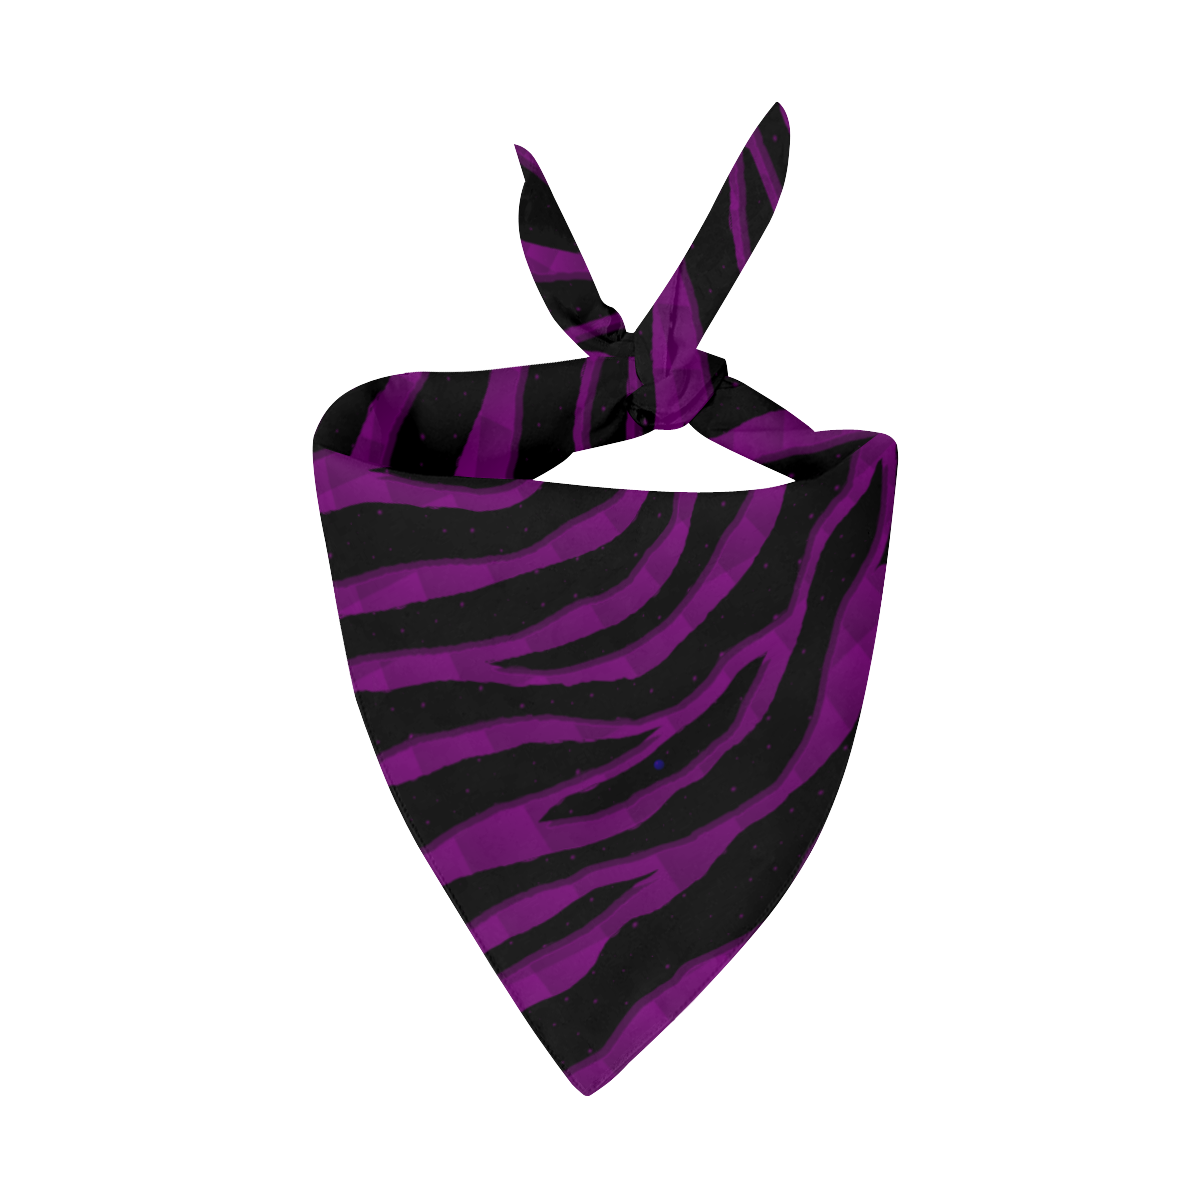 Ripped SpaceTime Stripes - Purple Pet Dog Bandana/Large Size